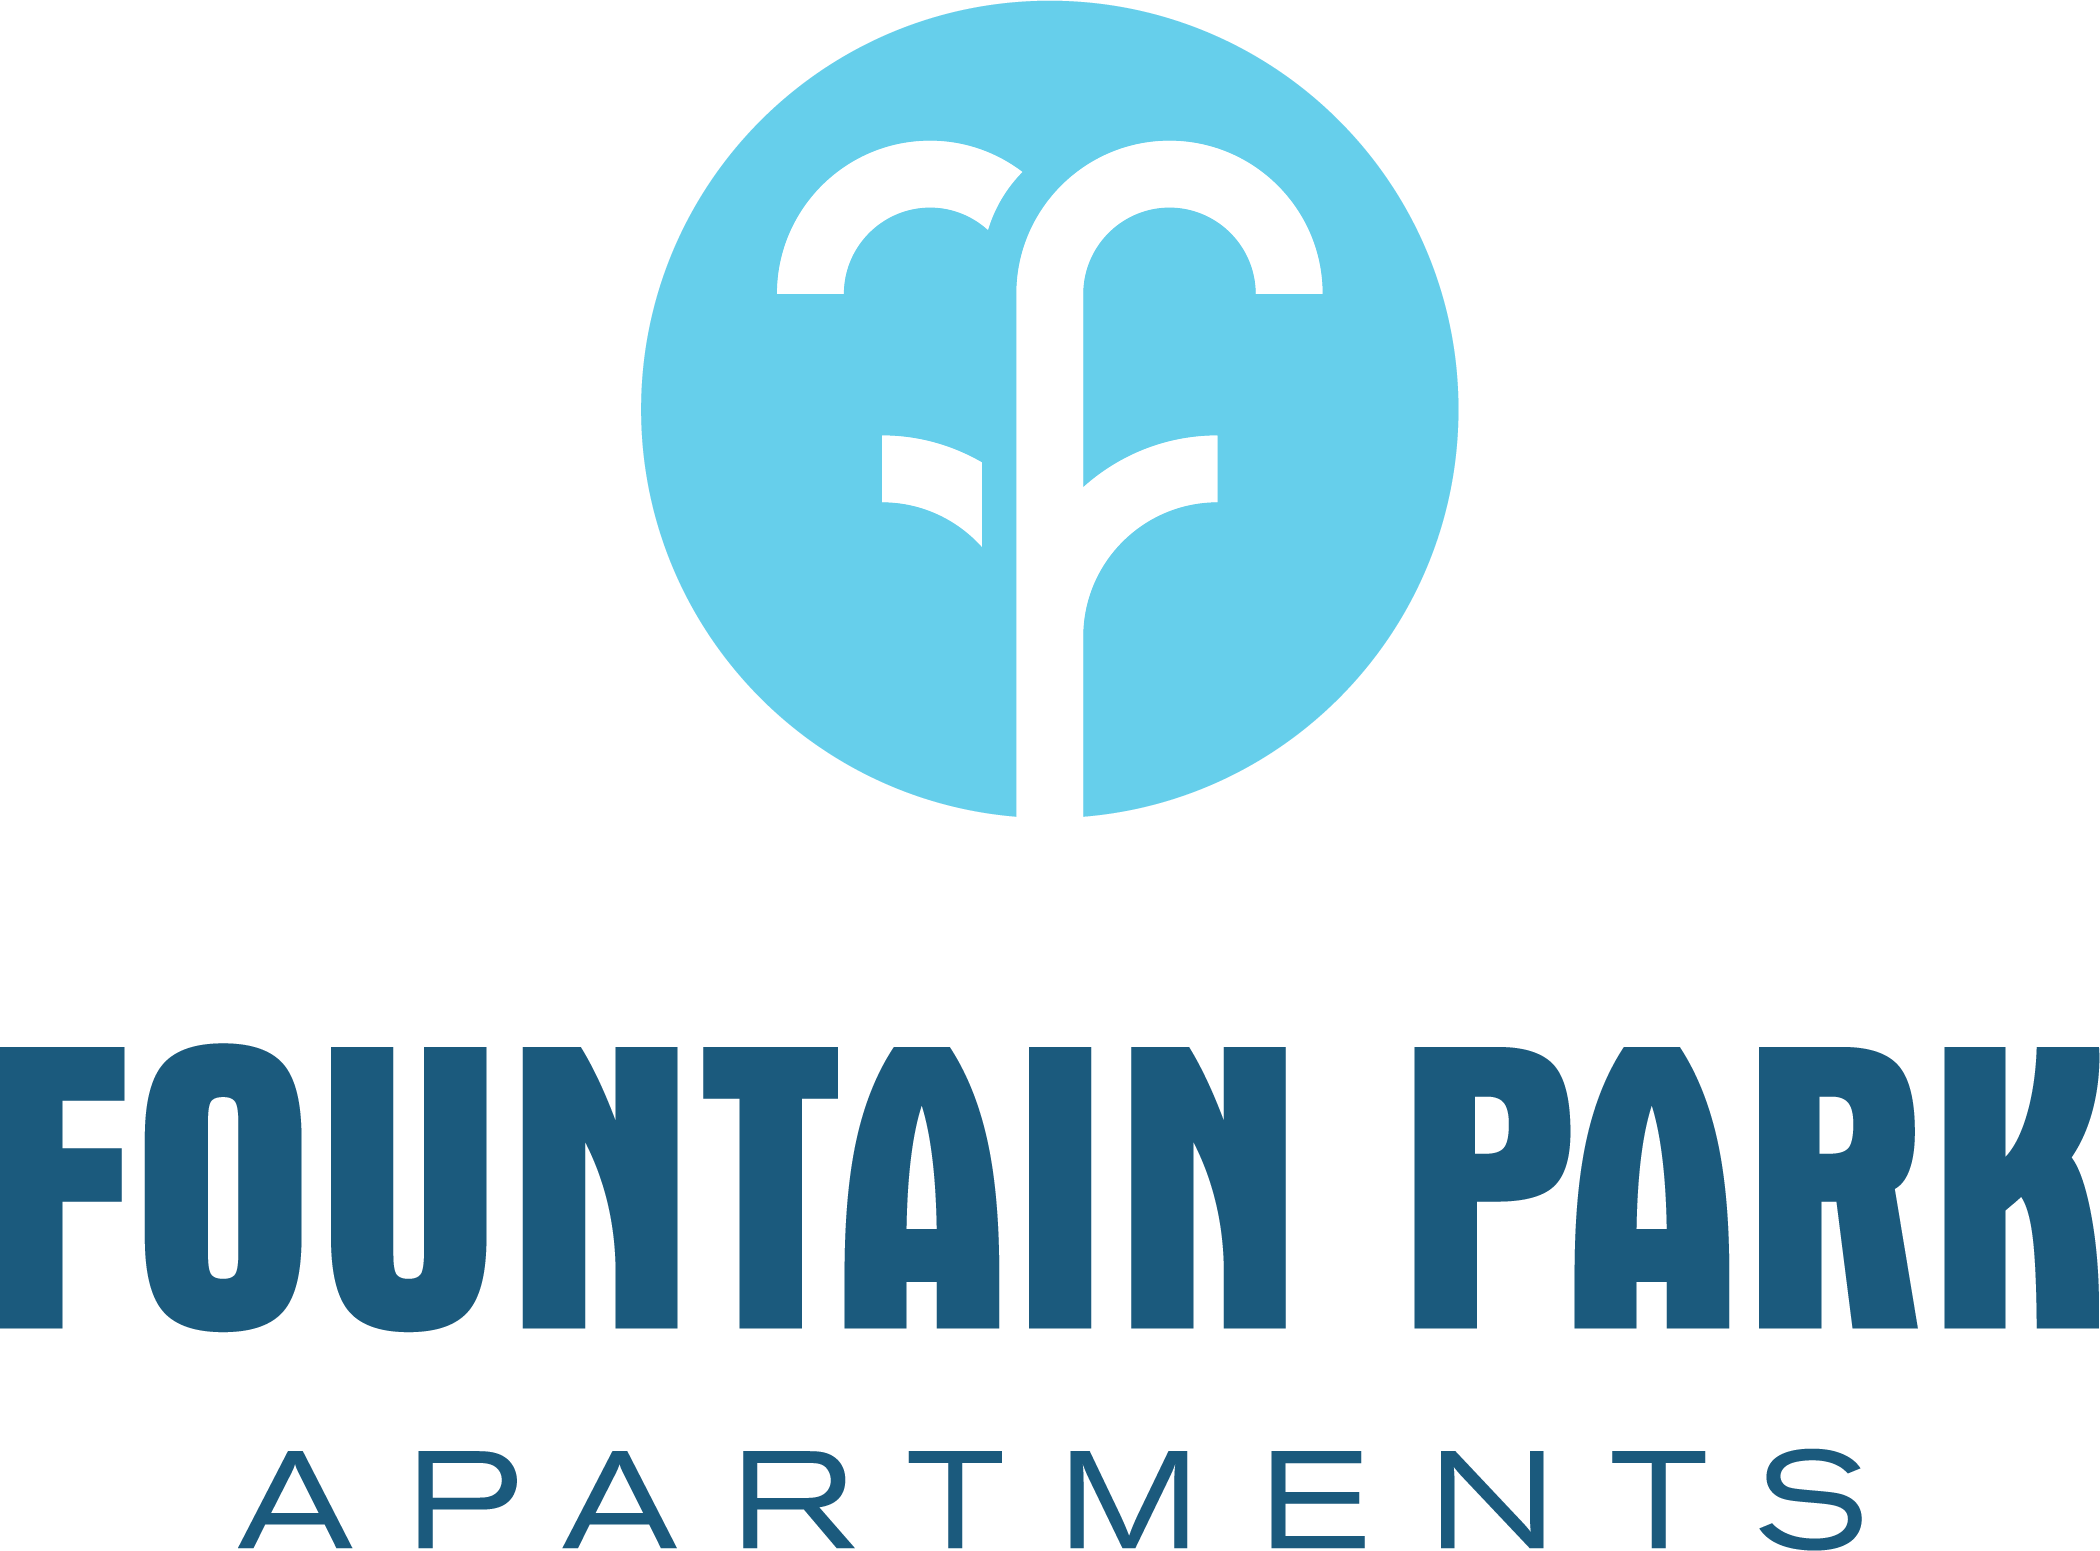 Regency - Fountain Park Apartments - Branding